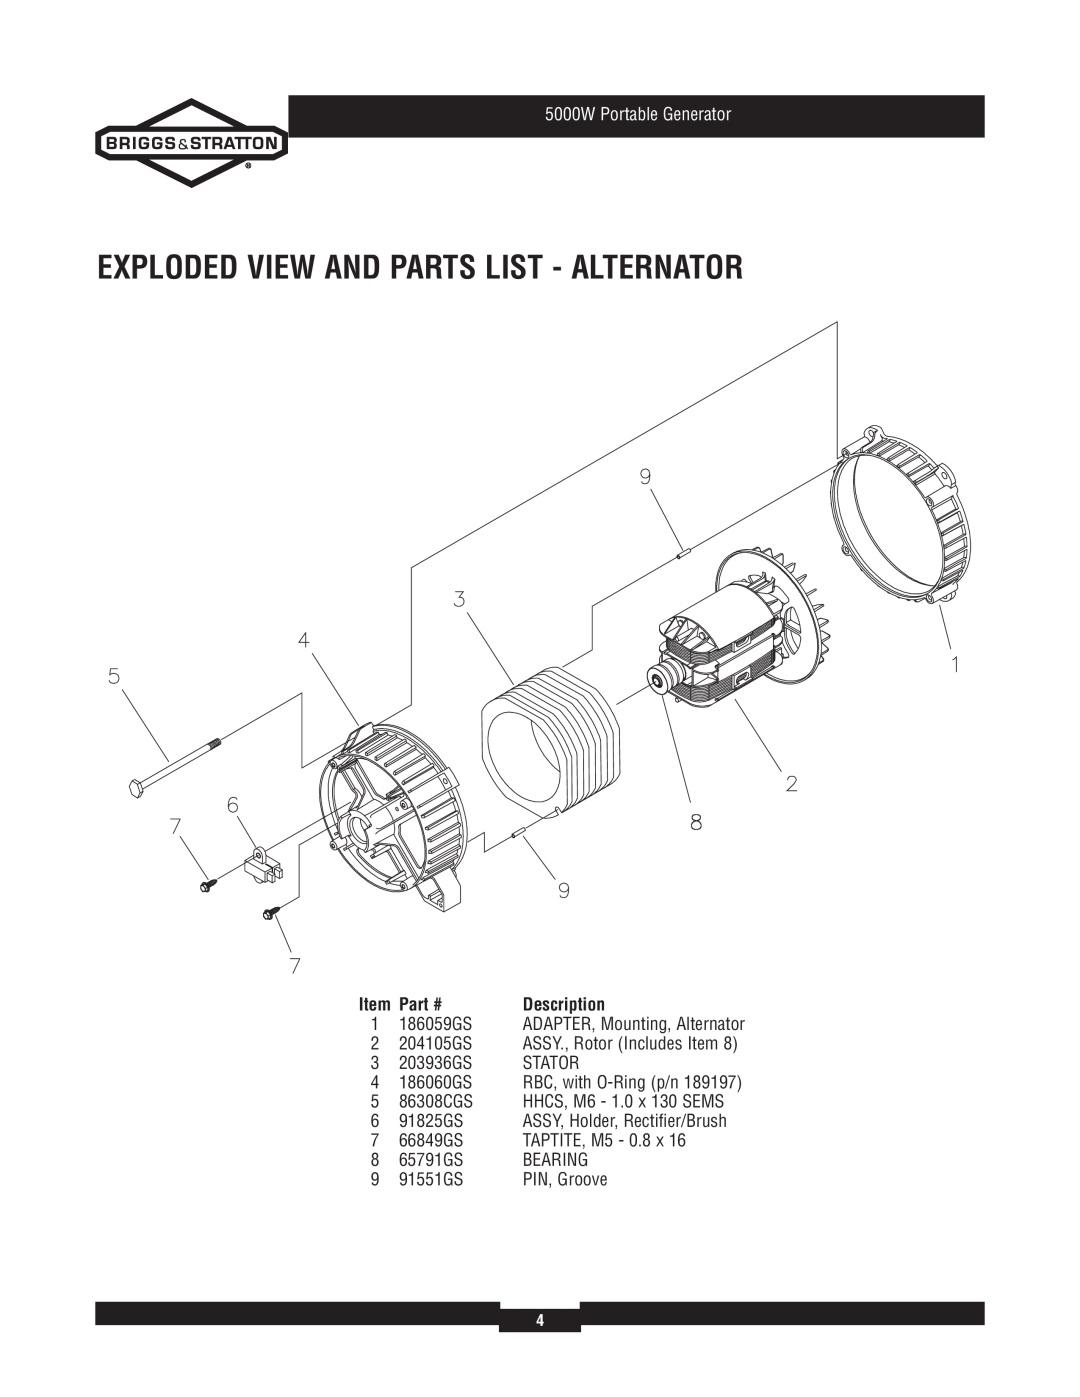 Briggs & Stratton 30361 manual Exploded View And Parts List - Alternator, 186059GS, 5000W Portable Generator, Description 